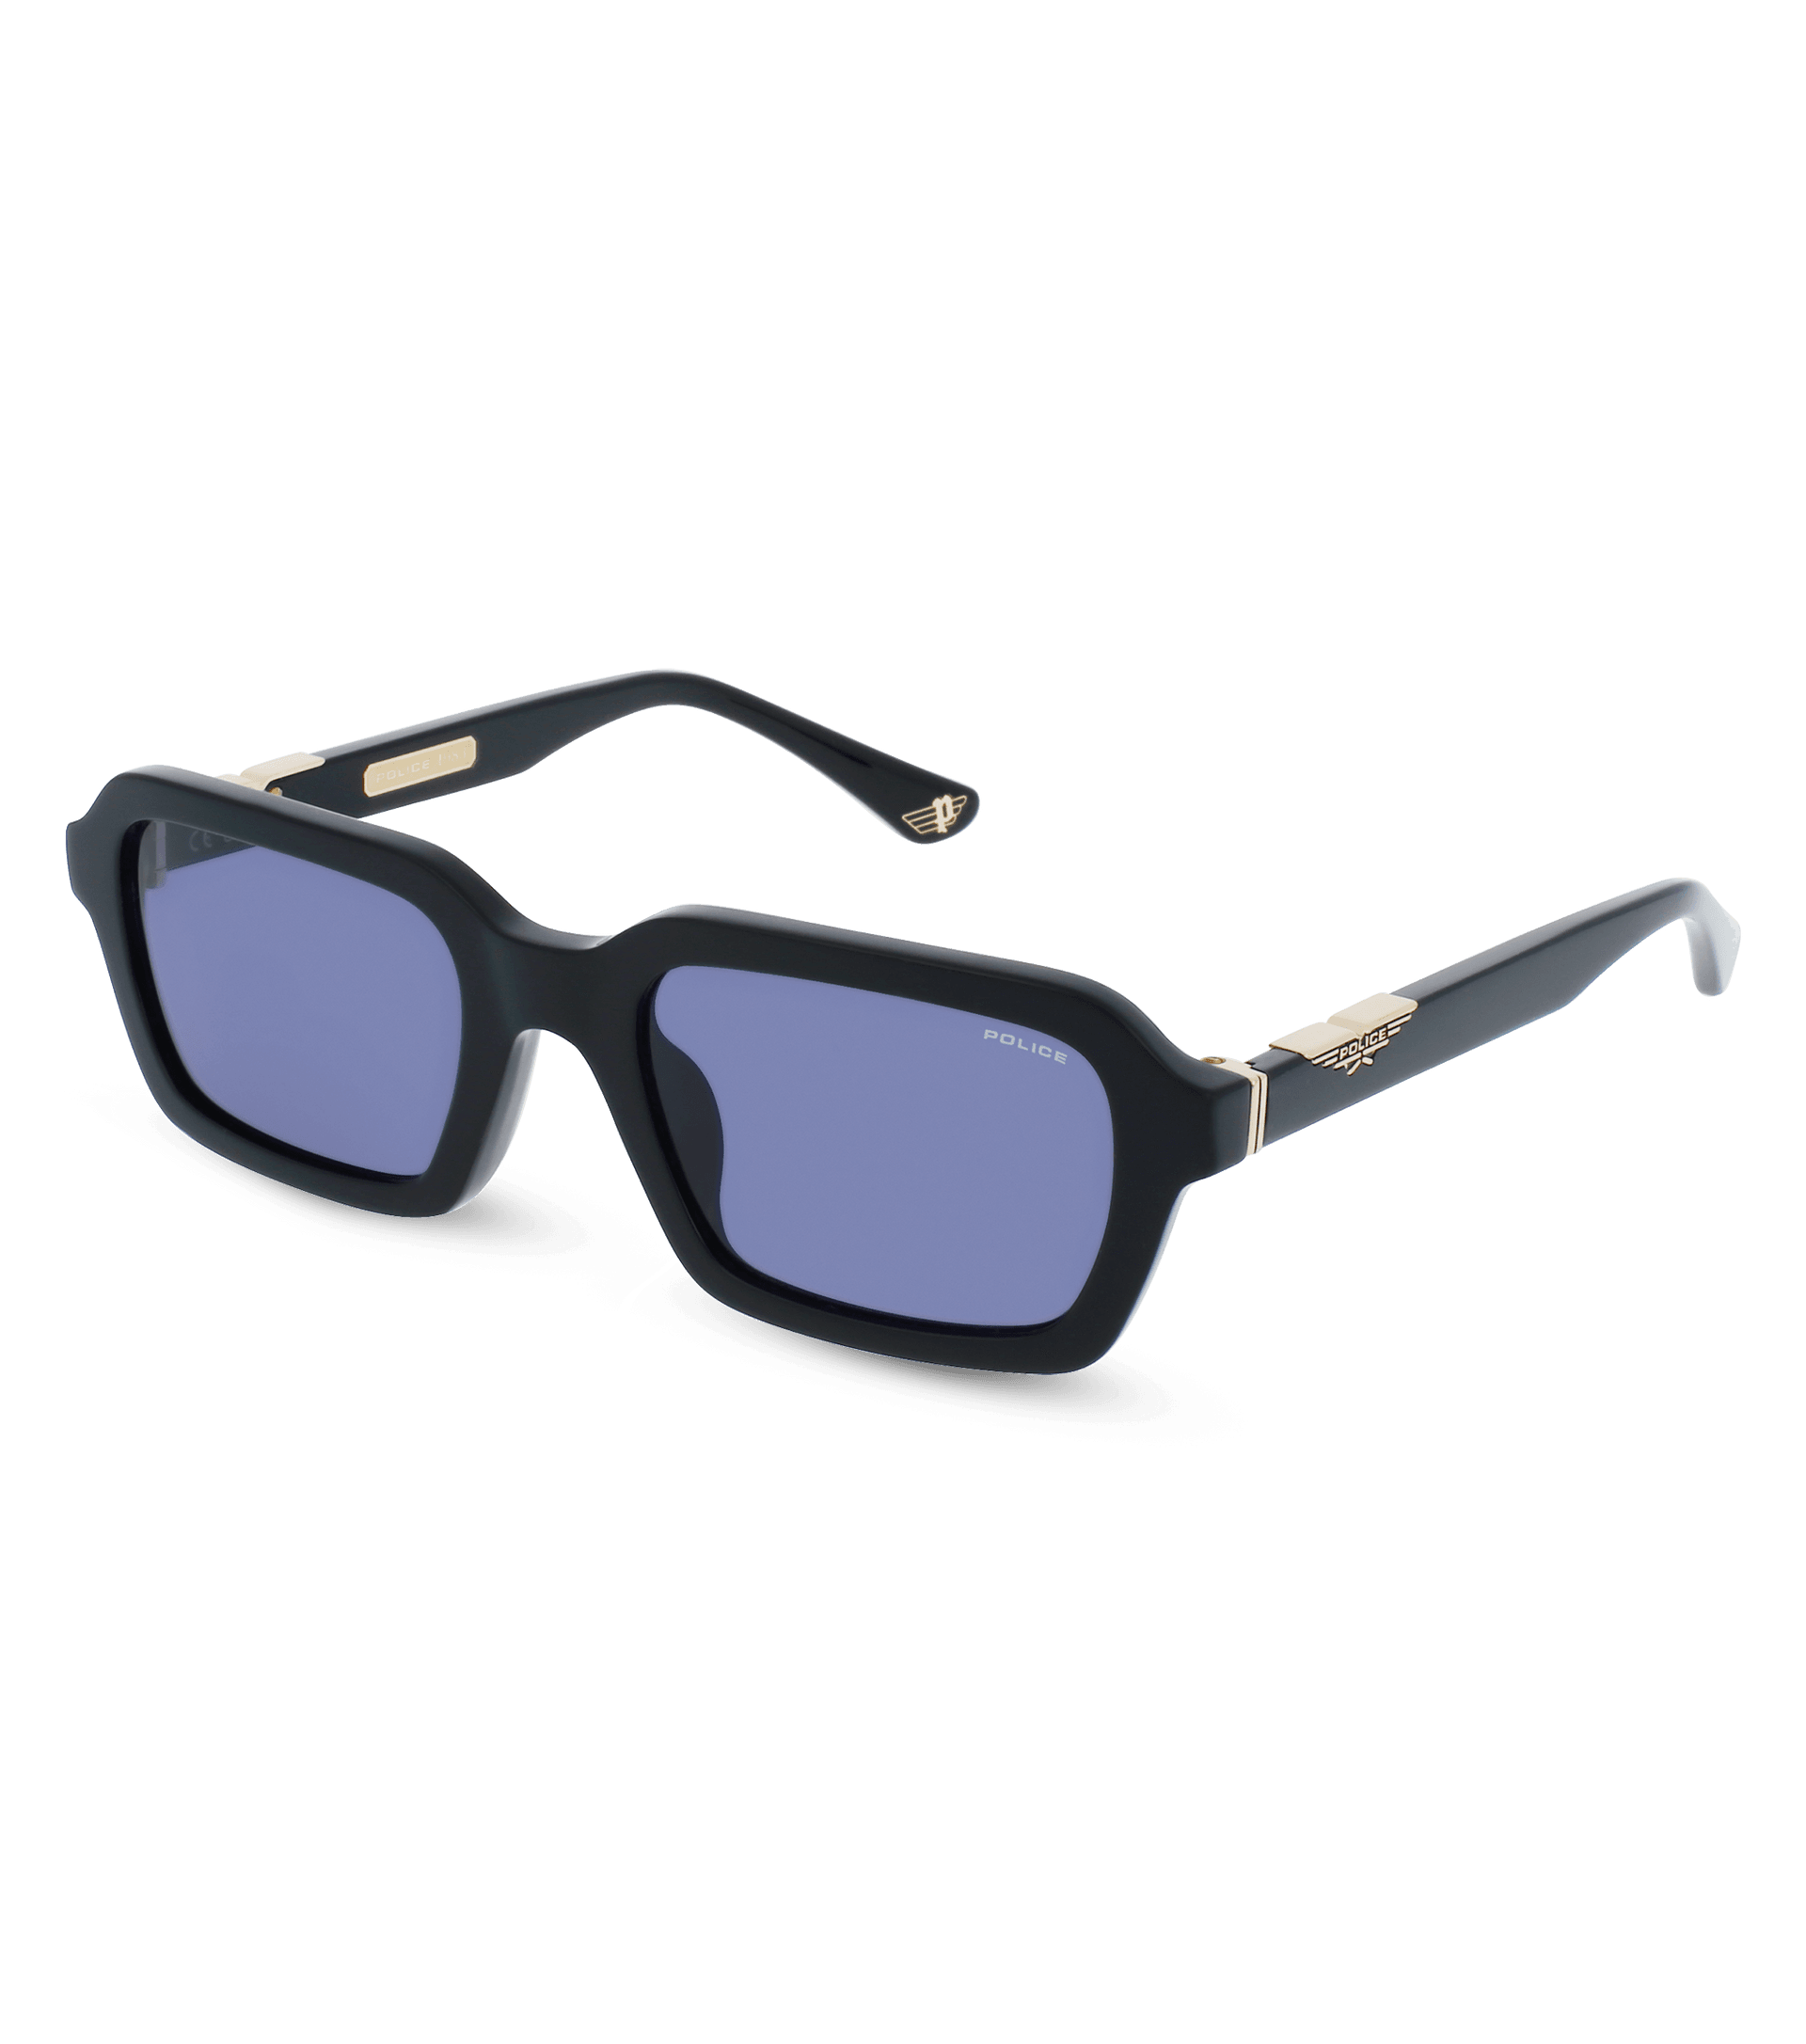 Police sunglasses - Monument 6 Man Sunglasses Police SPLL88E Black, Smoke